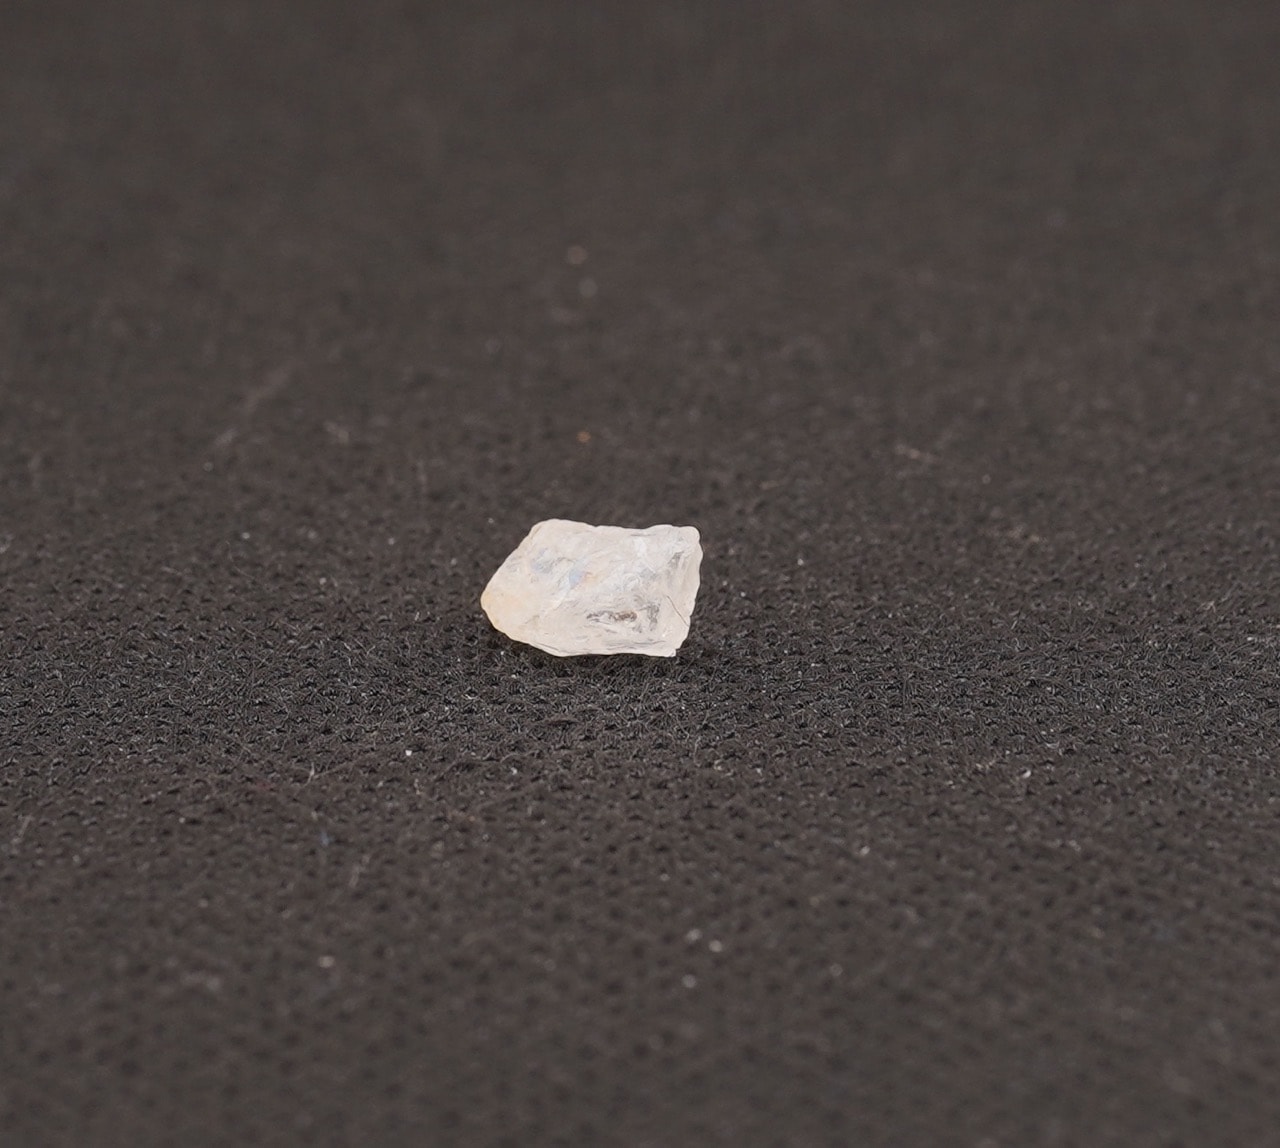 Fenacit nigerian cristal natural unicat f314